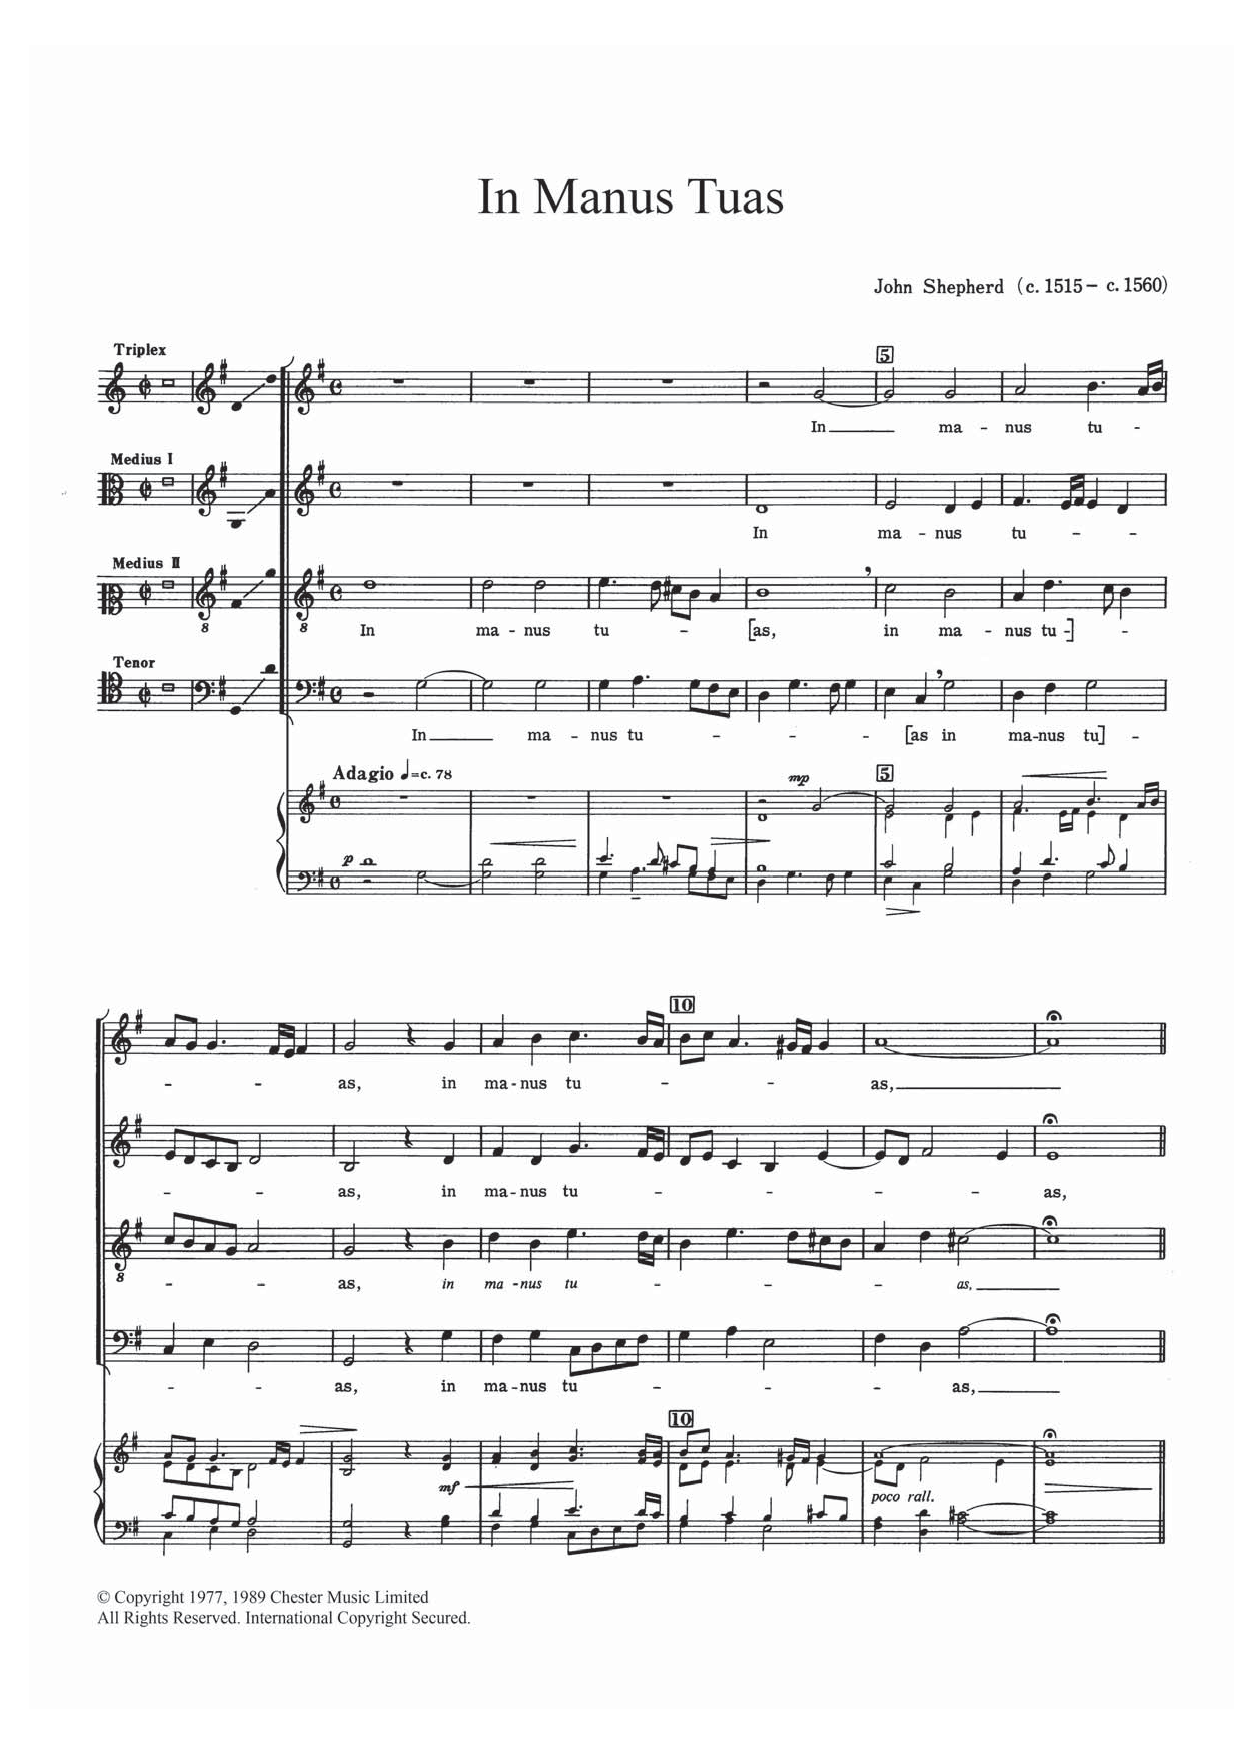 Download John Shepherd In Manus Tuas Sheet Music and learn how to play SATB PDF digital score in minutes